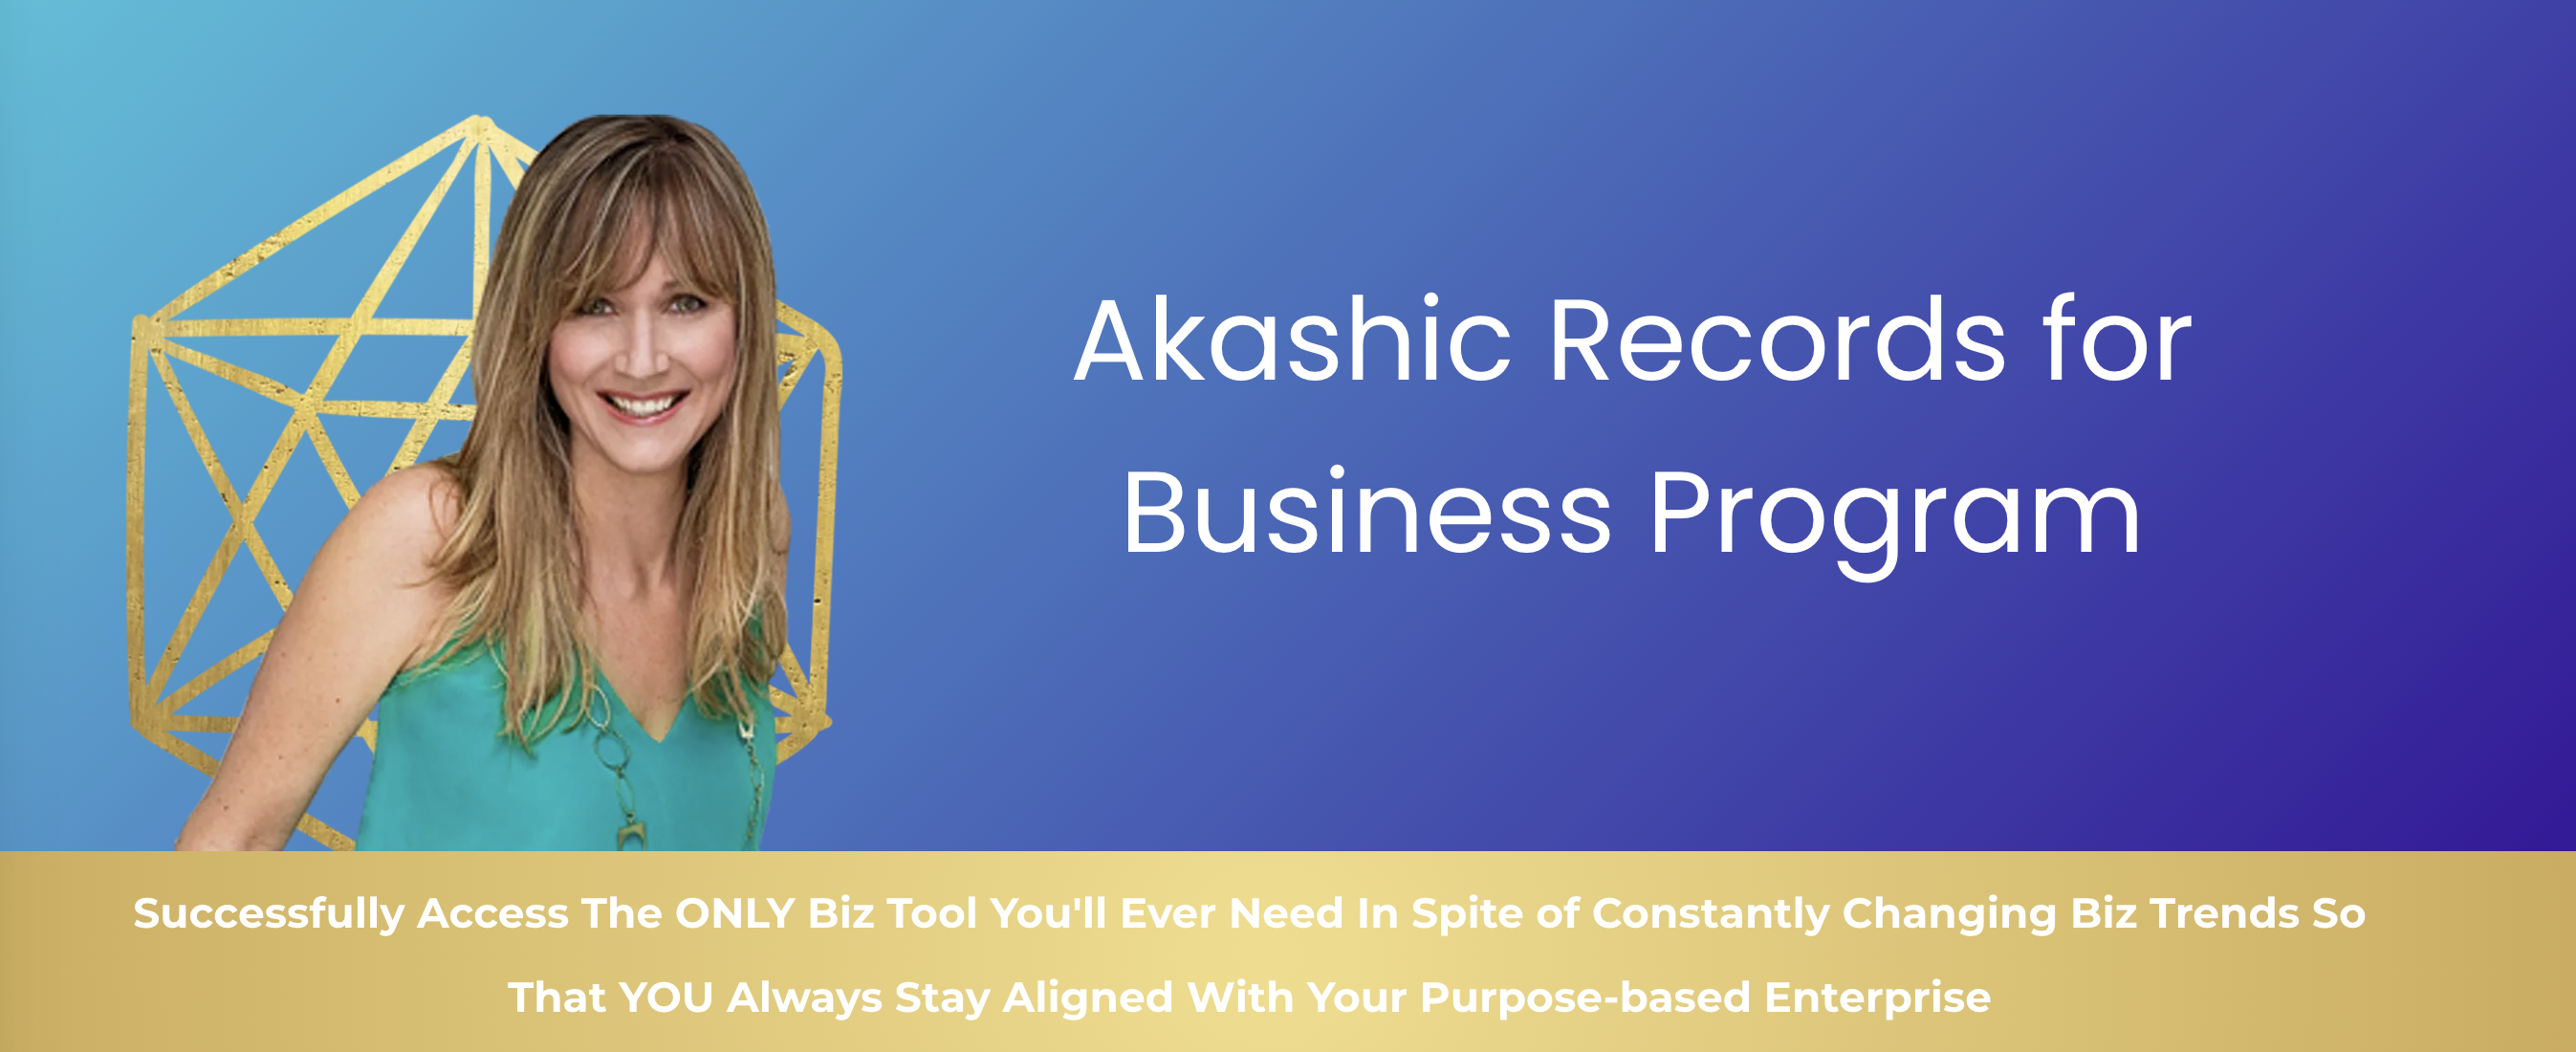 Akashic Records for Business Program (Standard) 2022 - Jennifer Longmore